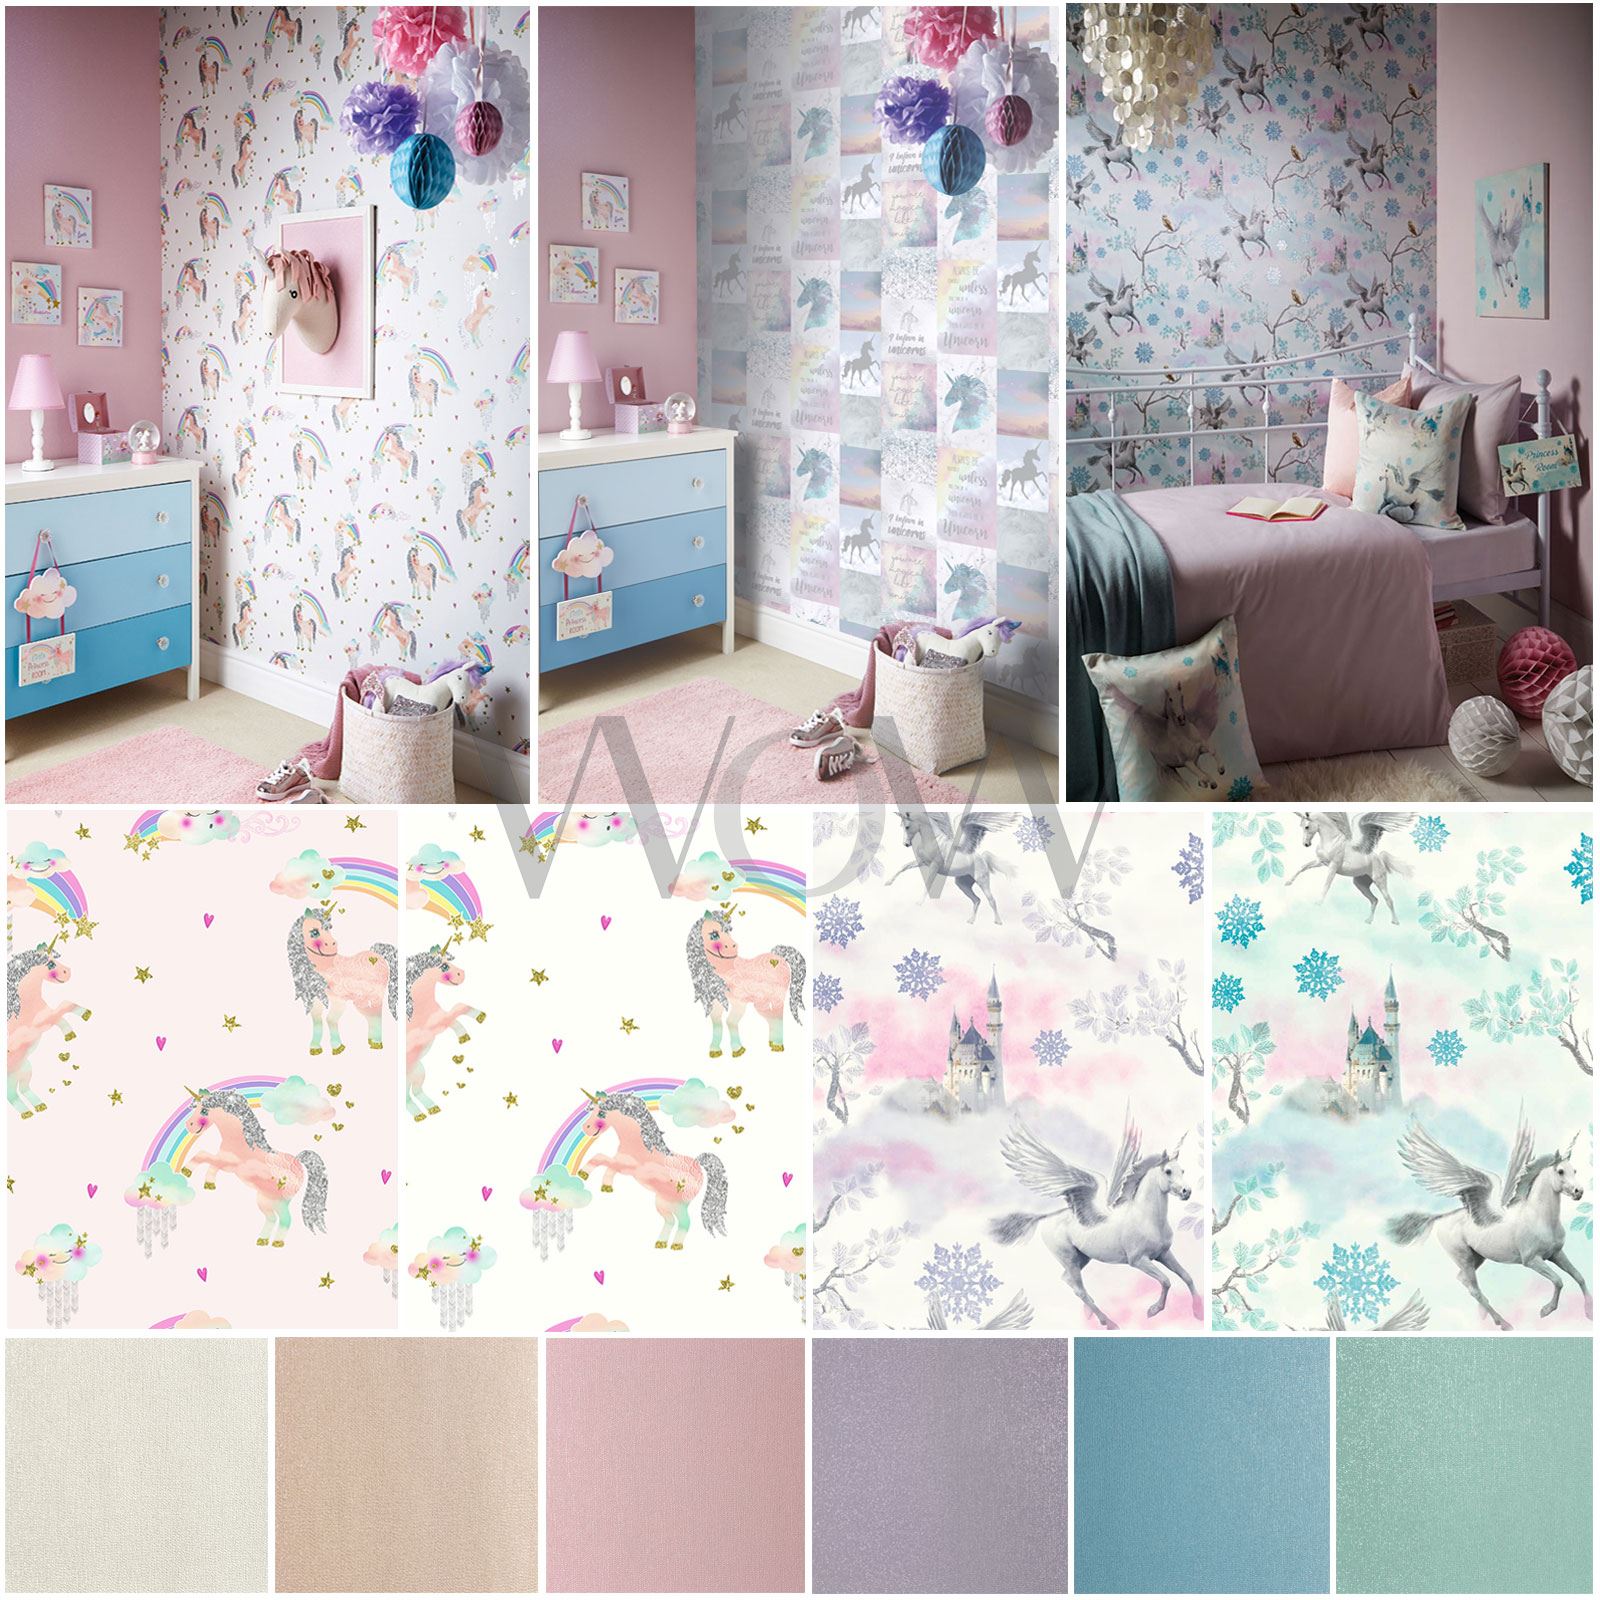 tottenham wallpaper for bedrooms,product,pink,wall,room,wallpaper